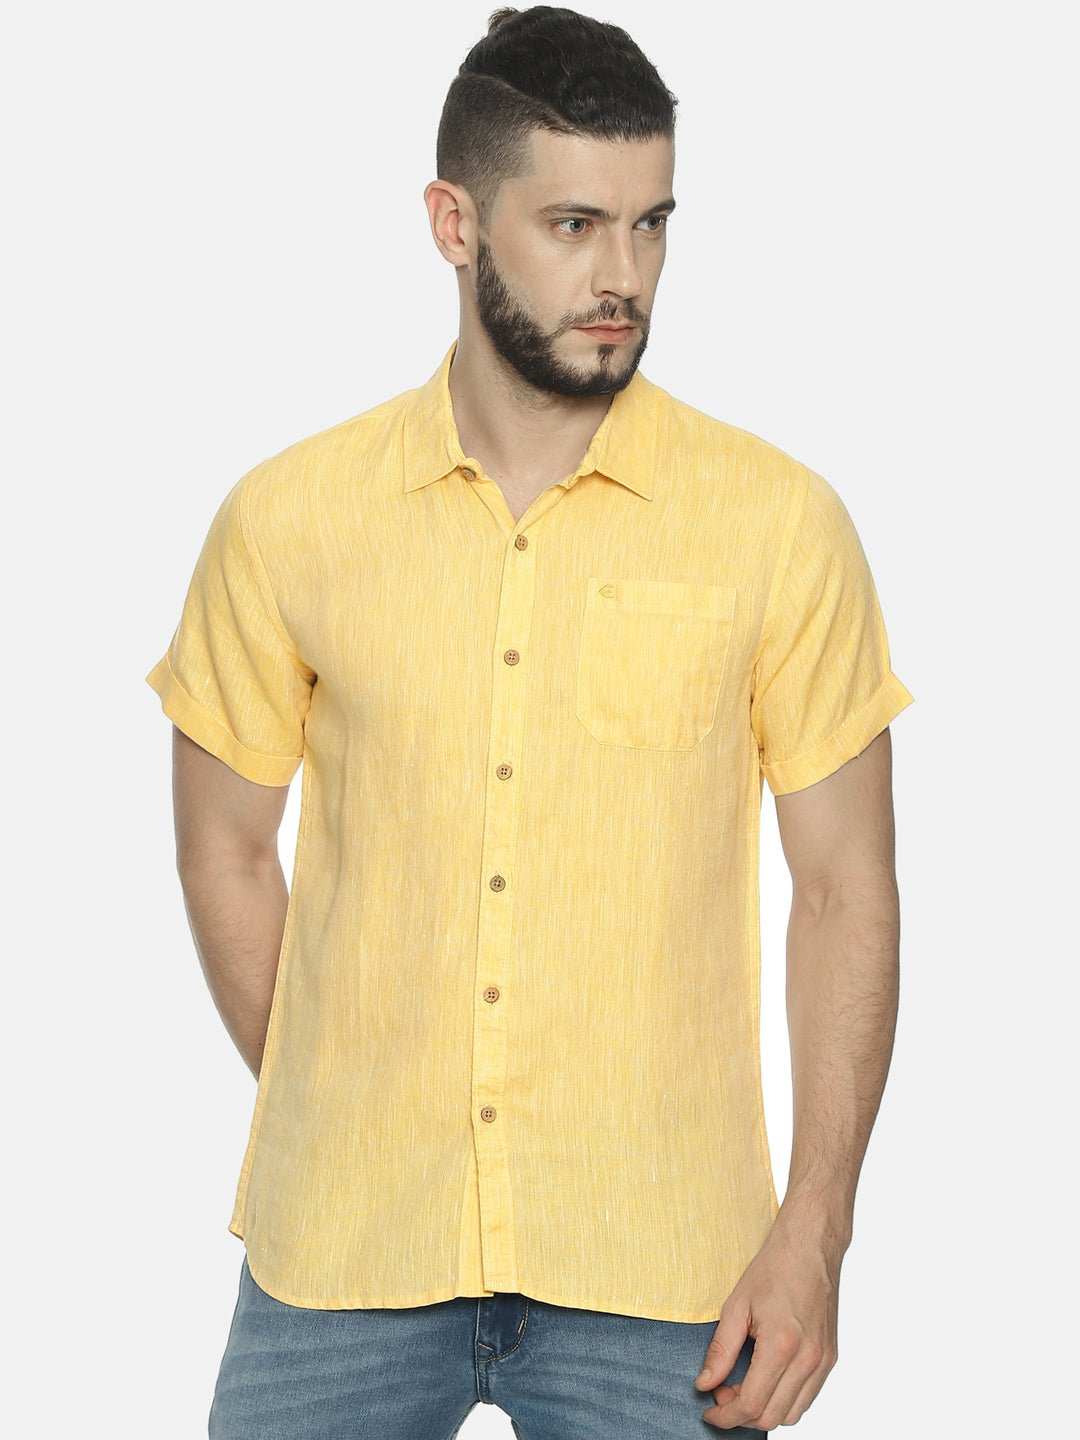 Ecentric Lemon Yellow Colour Slim Fit Hemp Casual Shirt - CBD Store India